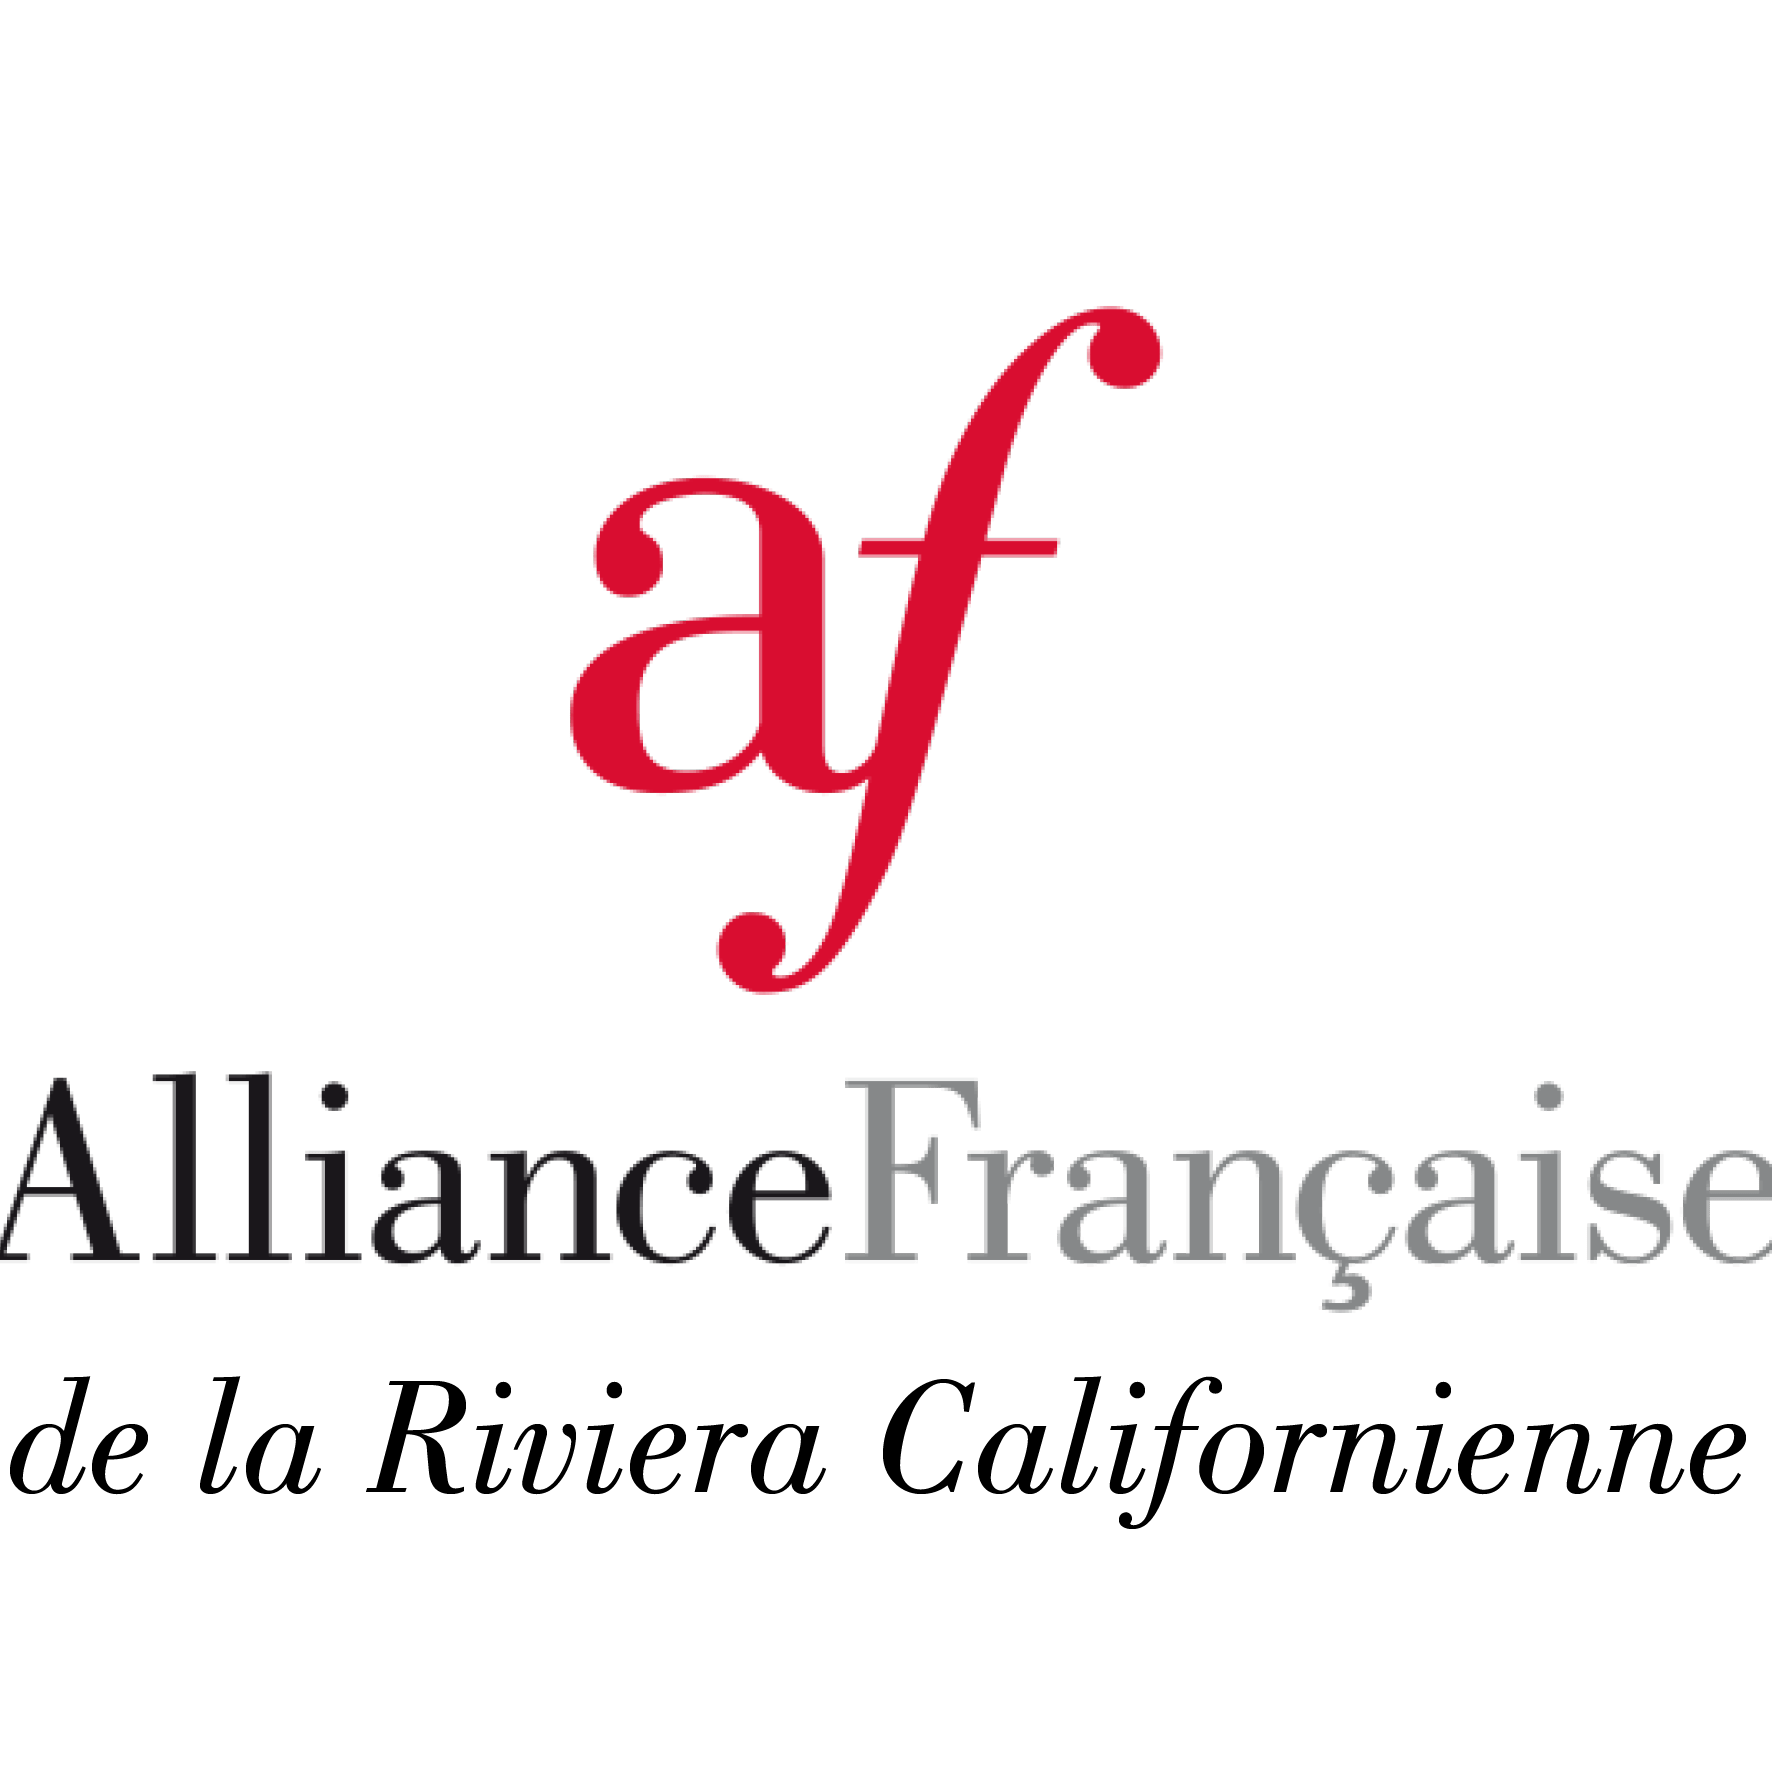 French Speaking Organization in Los Angeles California - Alliance Francaise de la Riviera Californienne